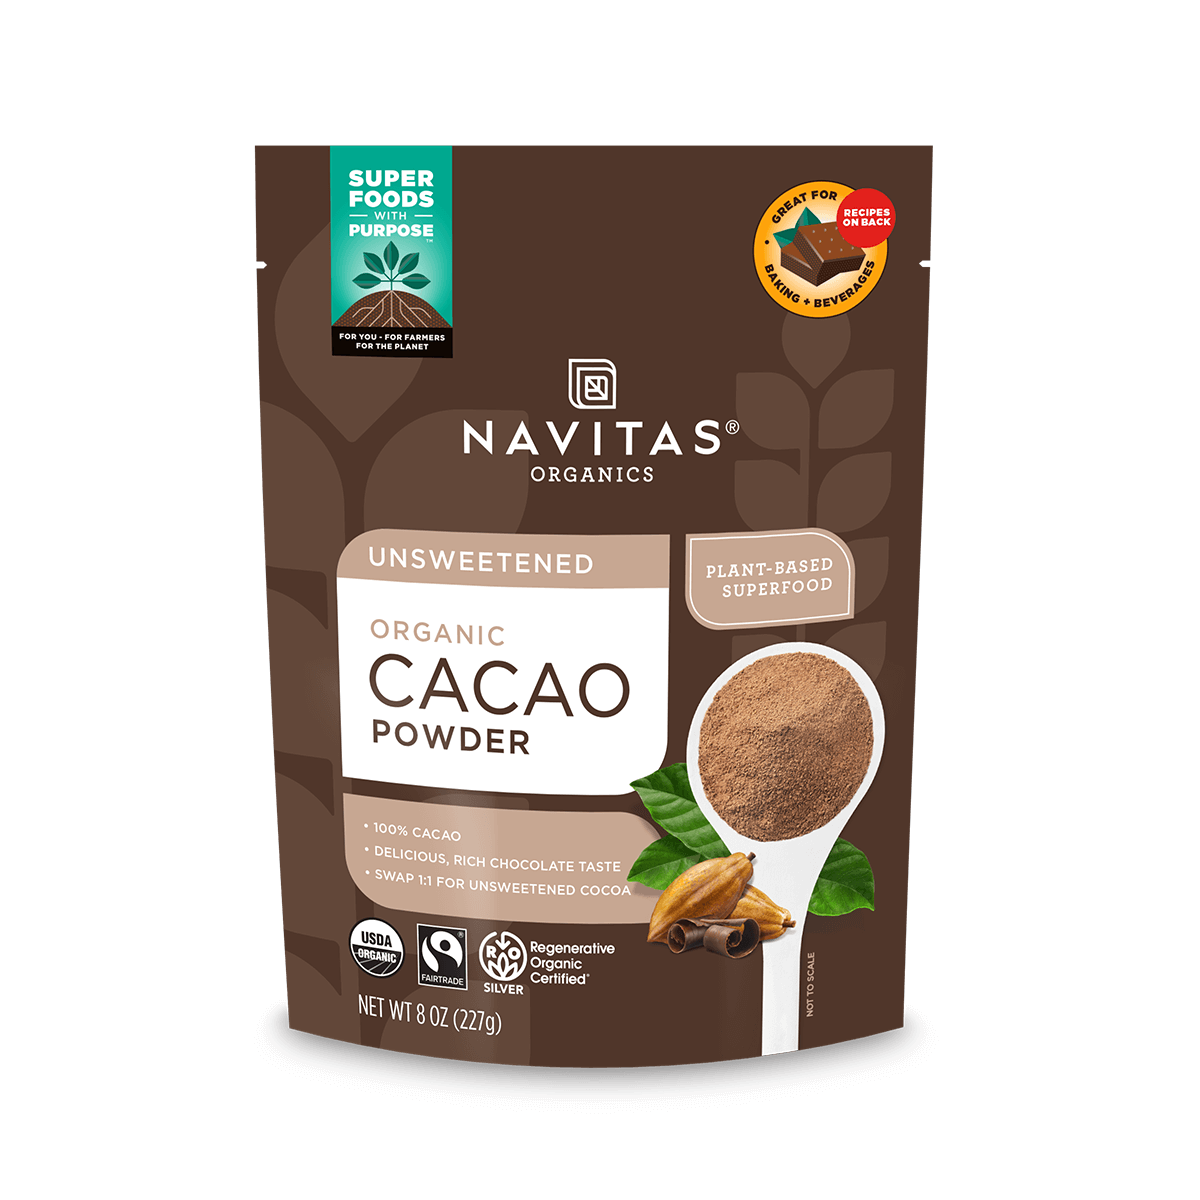 Navitas Organics 8oz Regenerative Organics Certified Cacao Powder front of bag